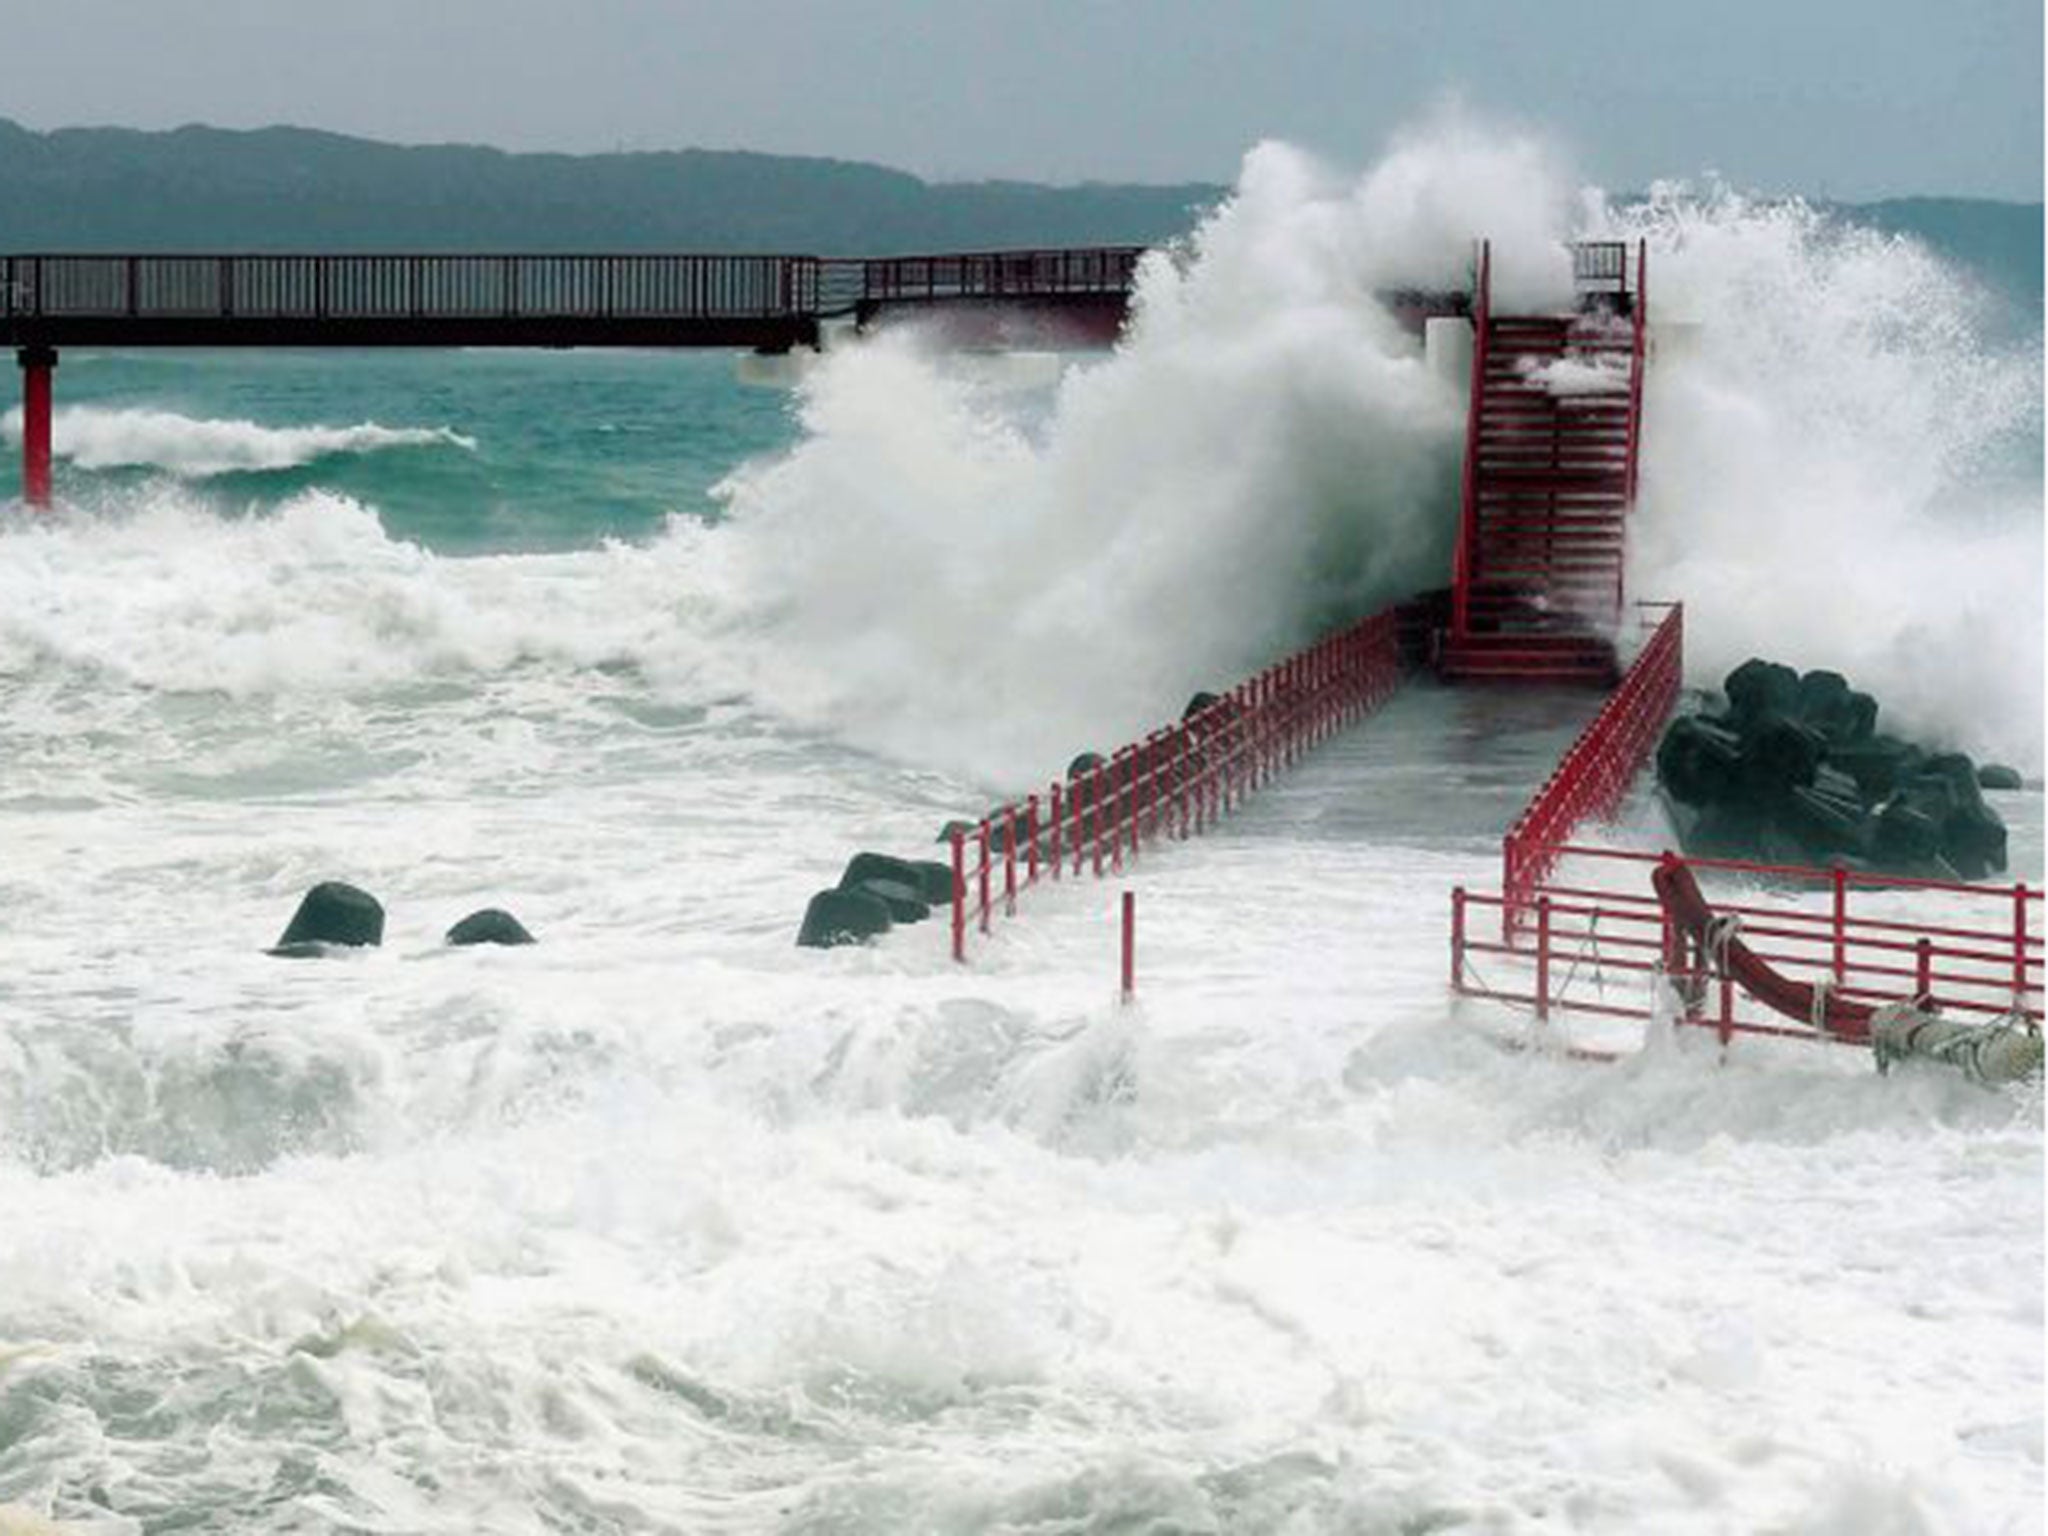 Typhoon Halong ravaged Japan's coast on Saturday evening